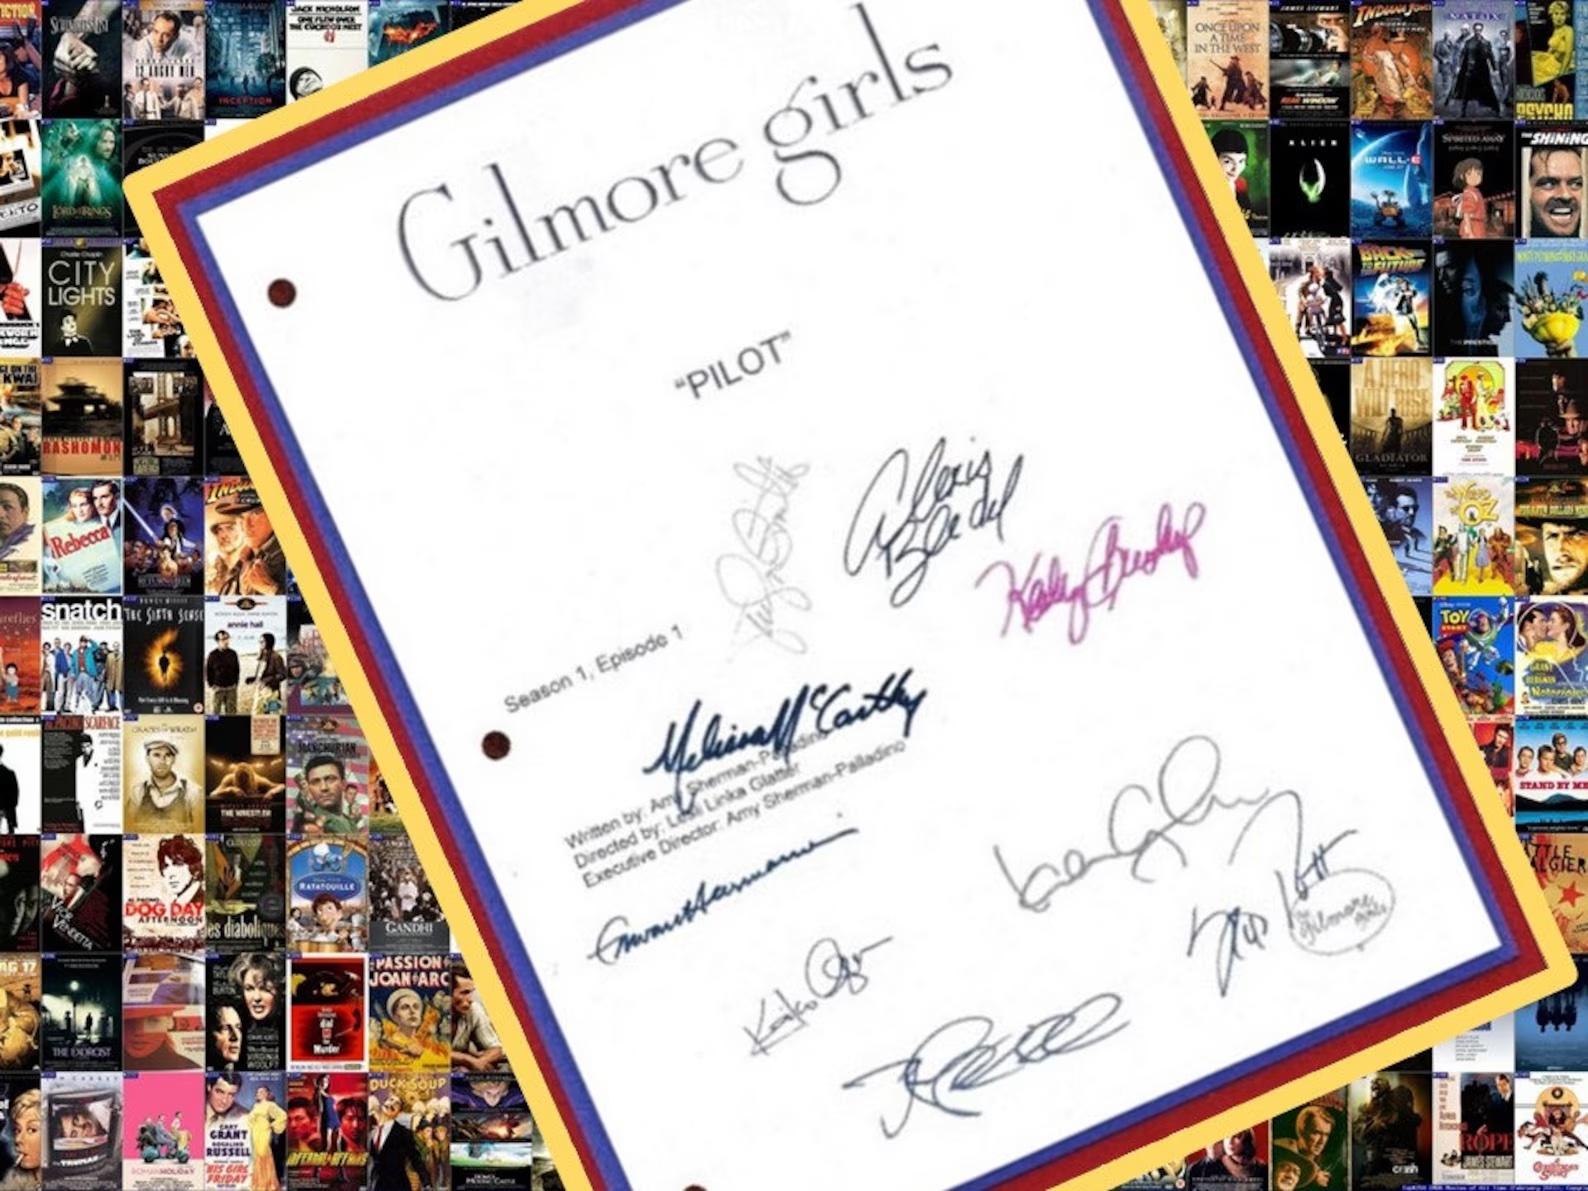 copie signée du scénario du pilote de Gilmore Girls